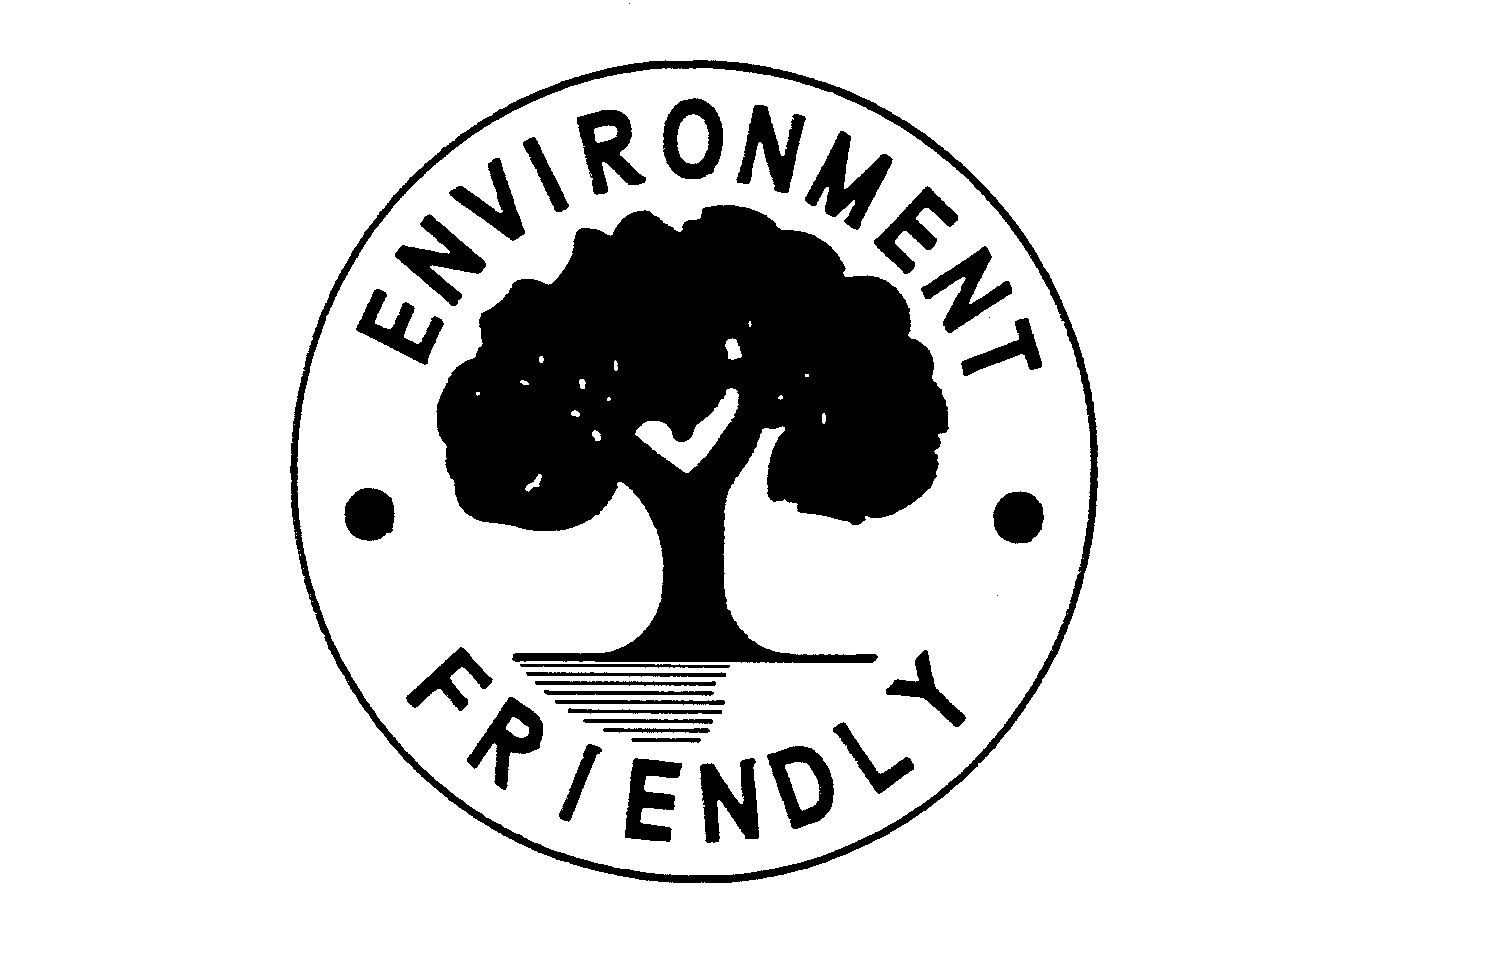 Trademark Logo ENVIRONMENT FRIENDLY